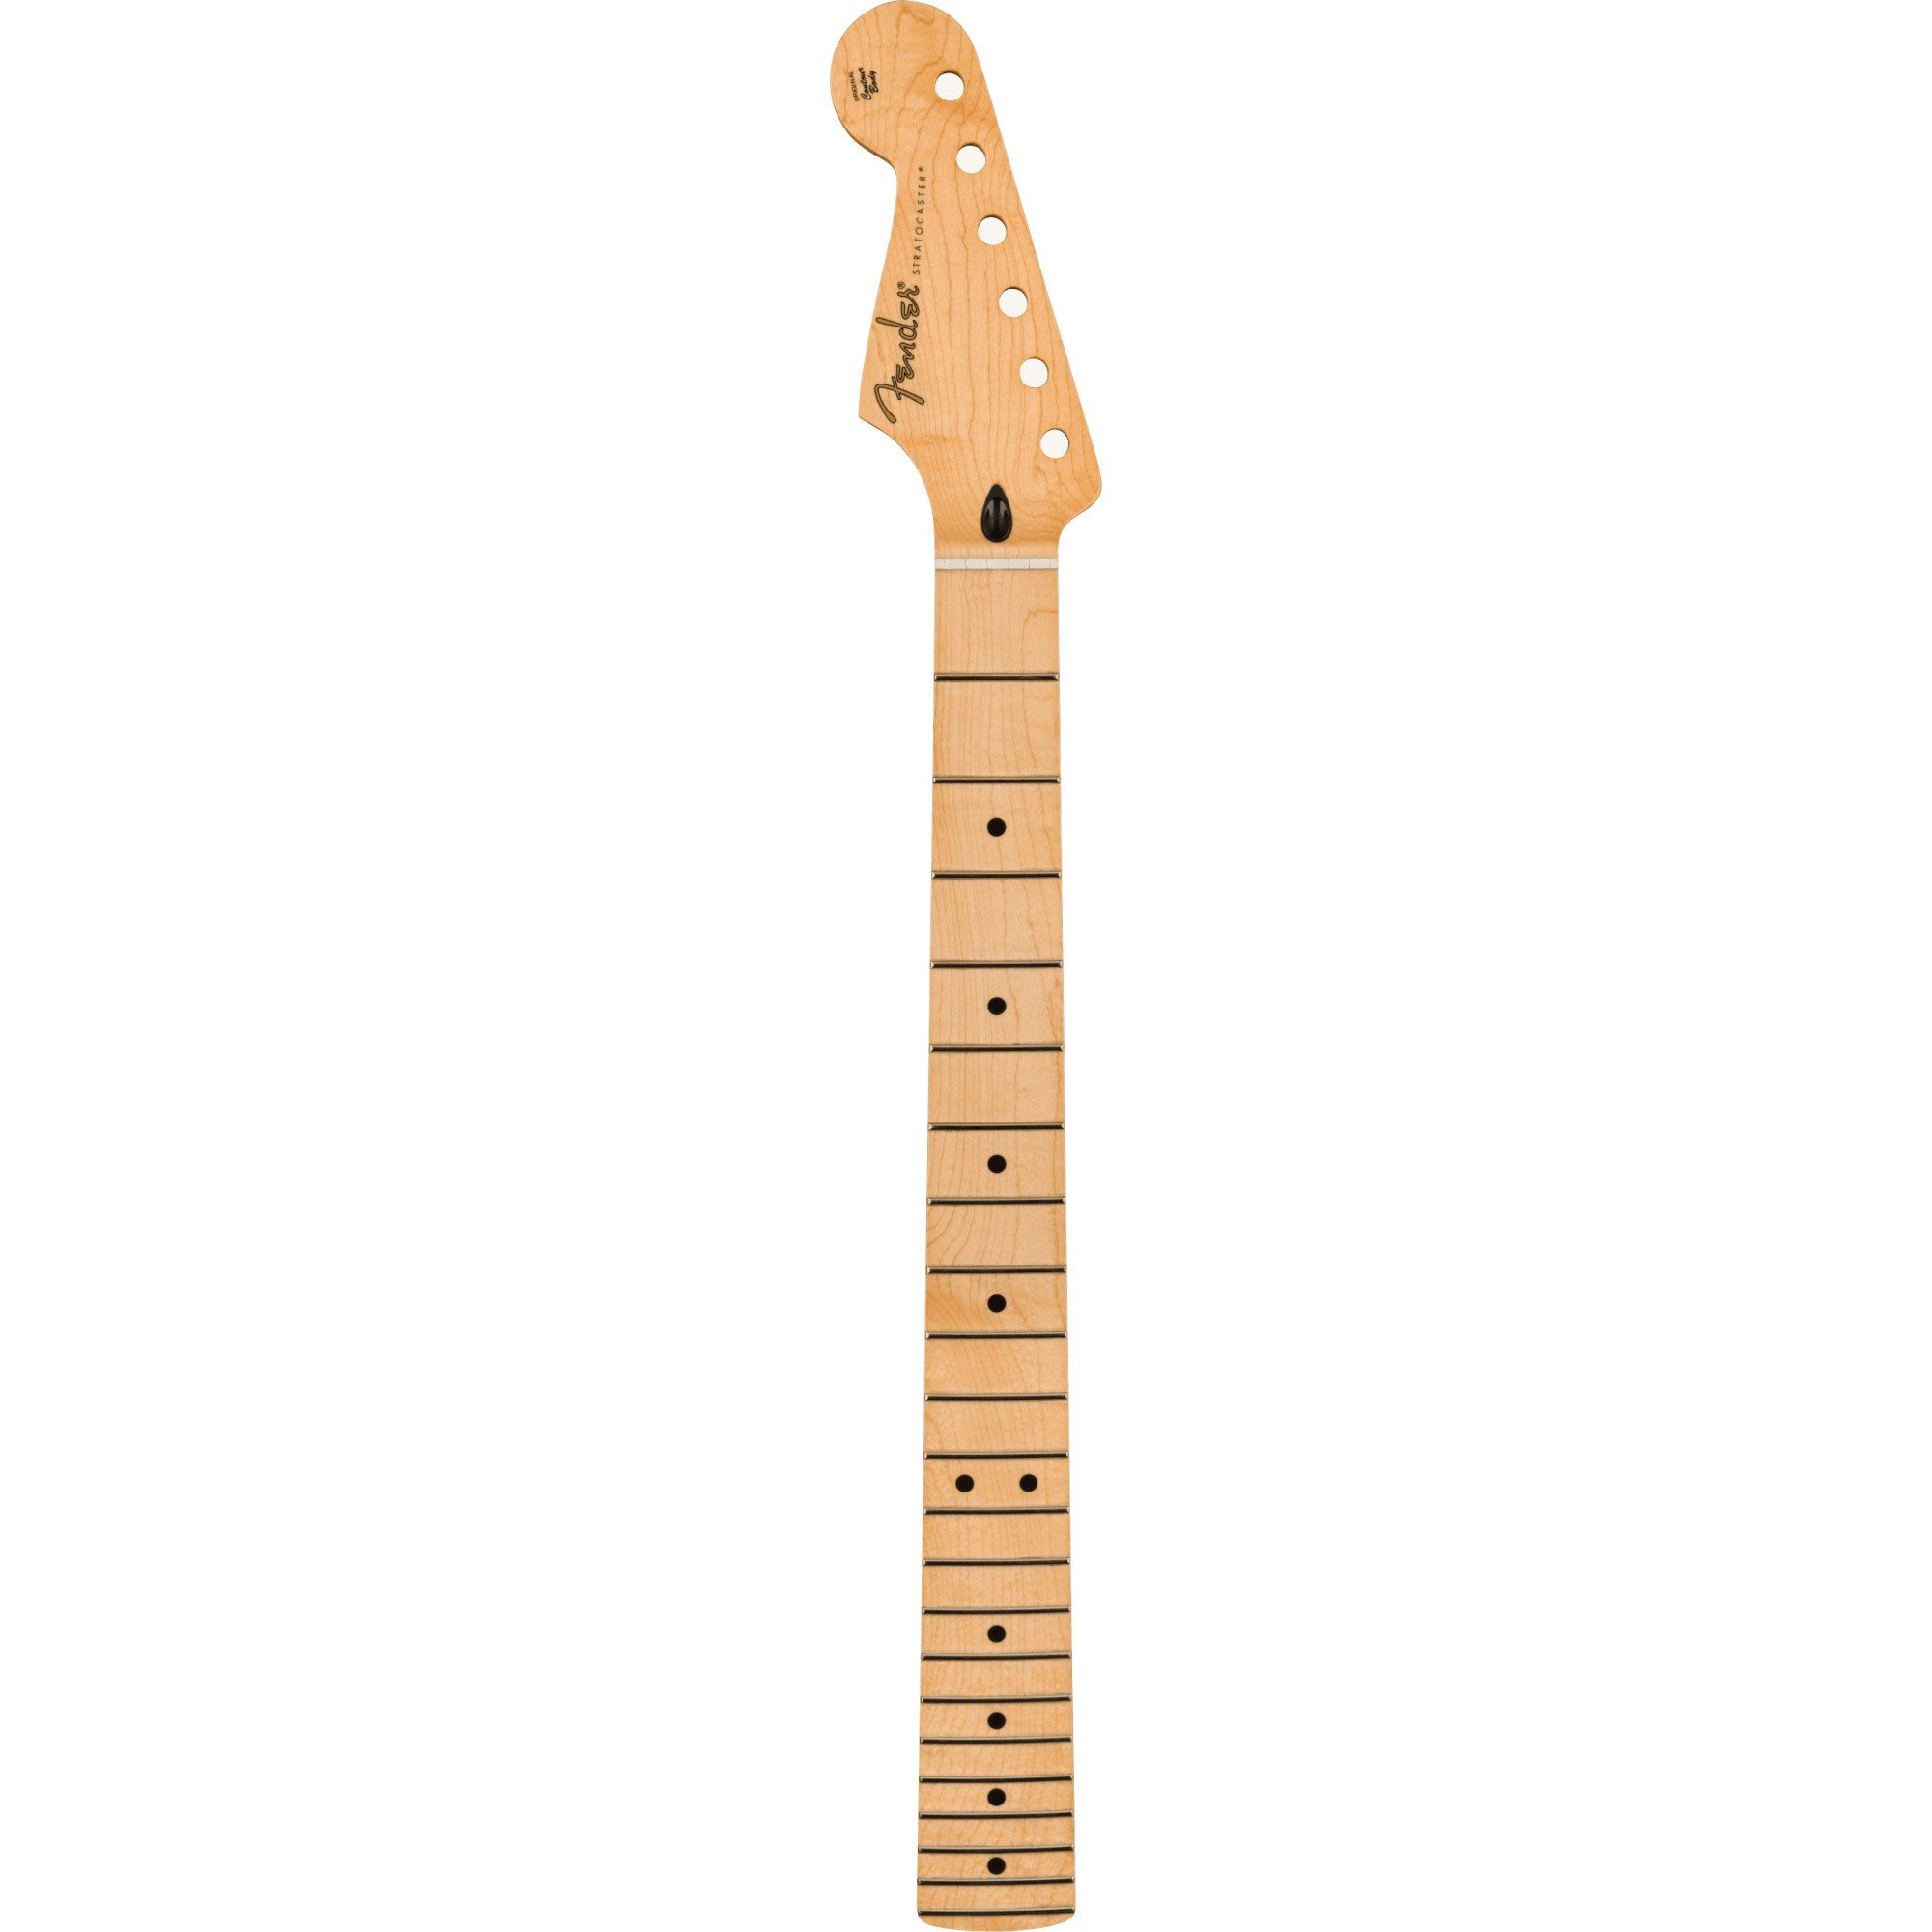 Fender Player Series Stratocaster Reverse Headstock Neck Maple